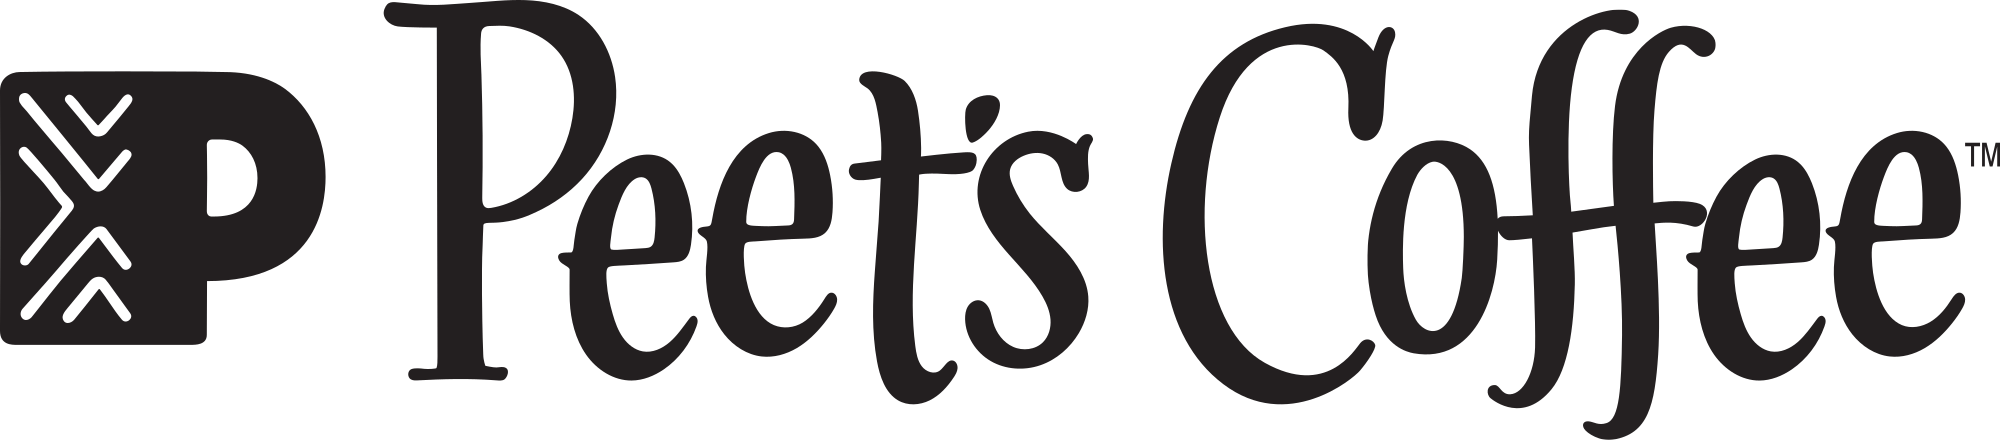 Peet's Coffee New Logo - File:Peet's Coffee logo.svg - Wikimedia Commons